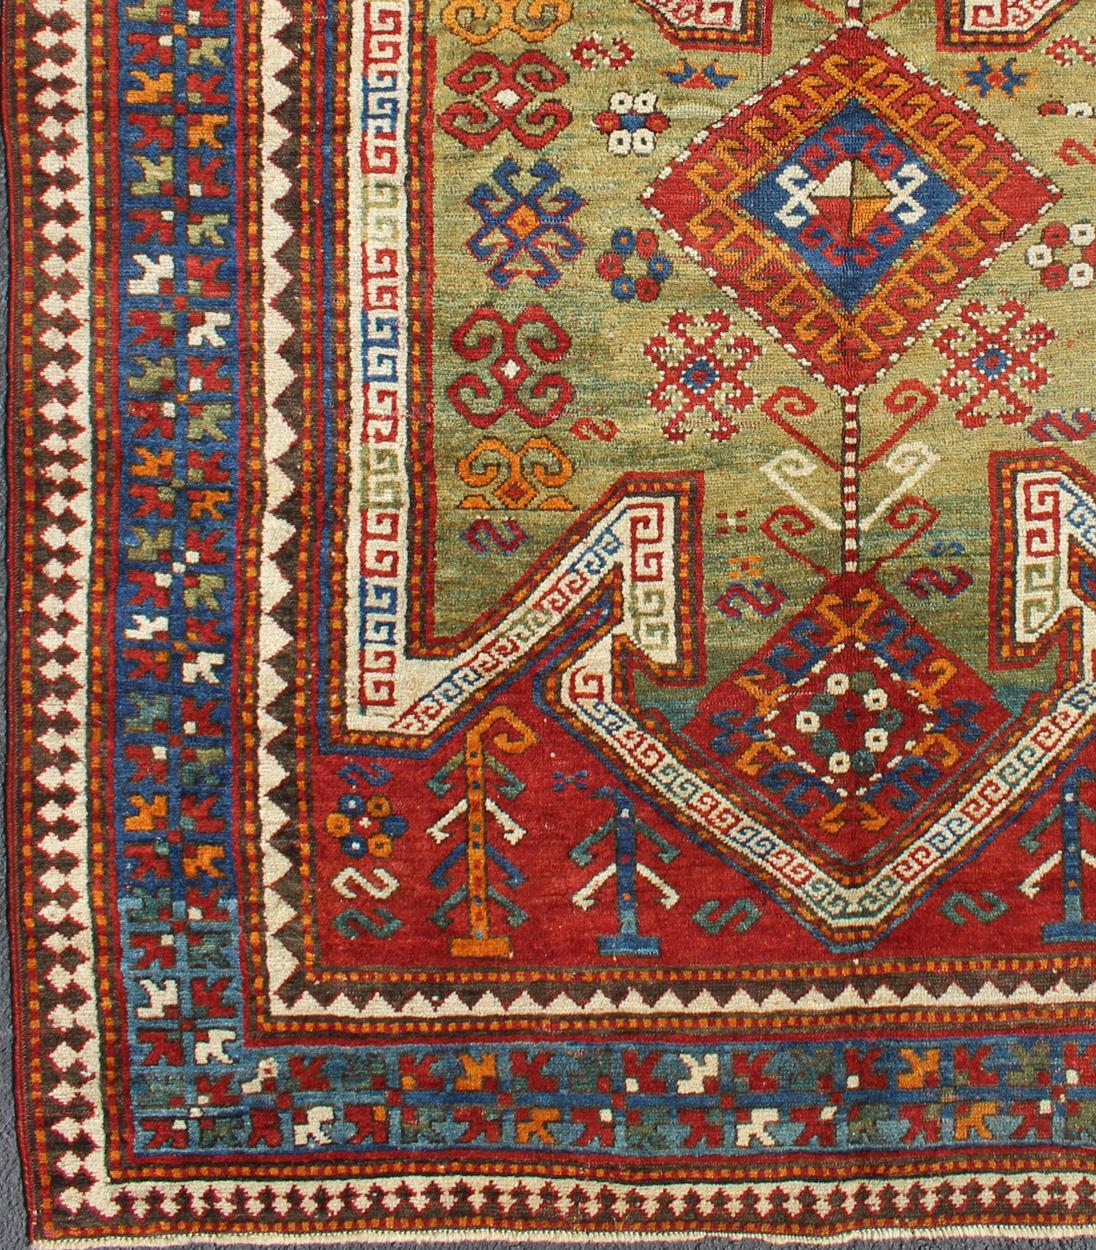 Kazak antique rug from Caucasus with tribal geometrics in bold color tones, rug 11-20939, country of origin / type: Caucasus, Kazak, circa 1890

The Sewan Kazak is among the most iconic of Caucasian village weaving. This strikingly beautiful